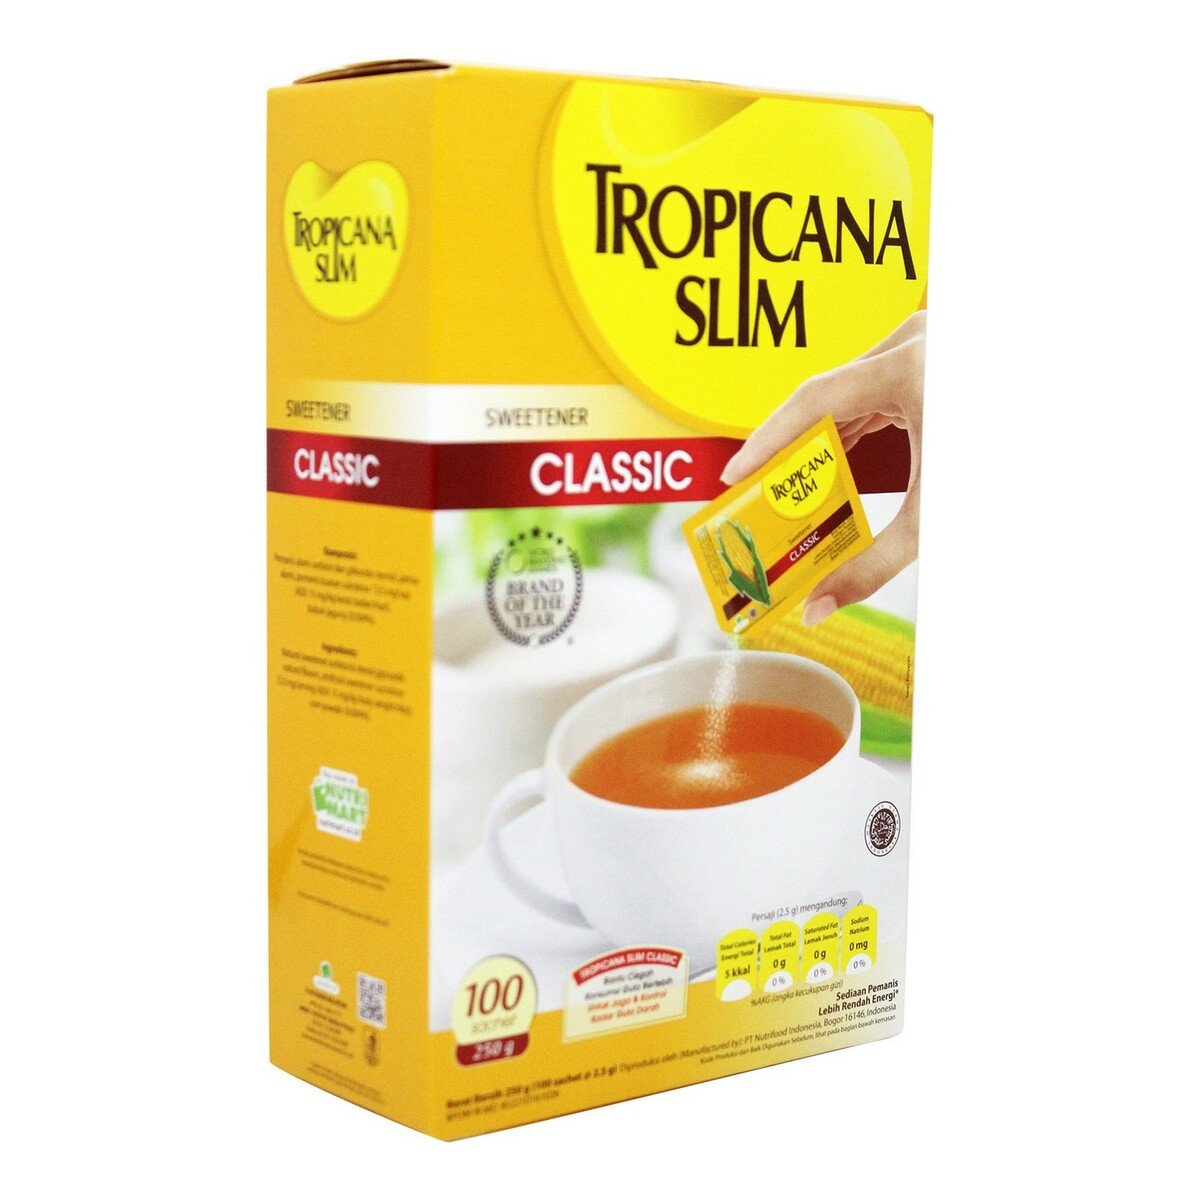 Tropicana Slim Sweetener Classic 100pcs